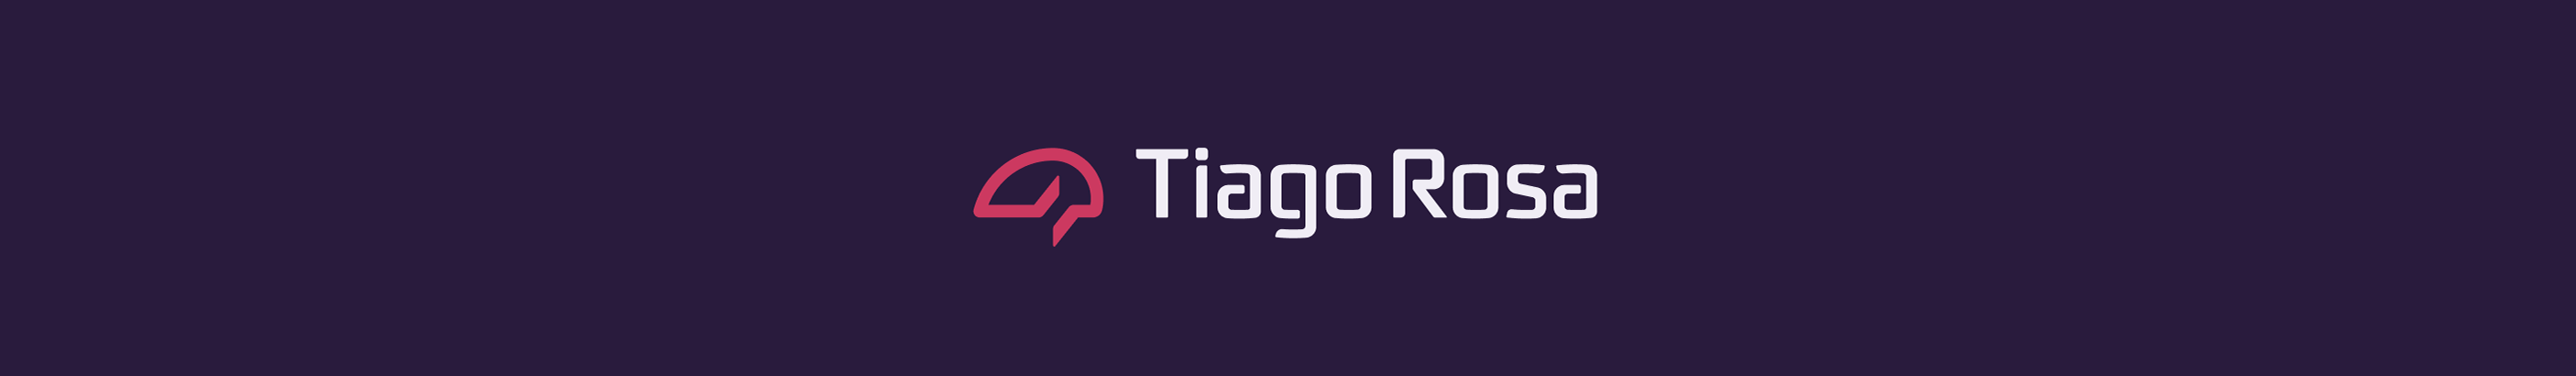 Tiago Rosa's profile banner